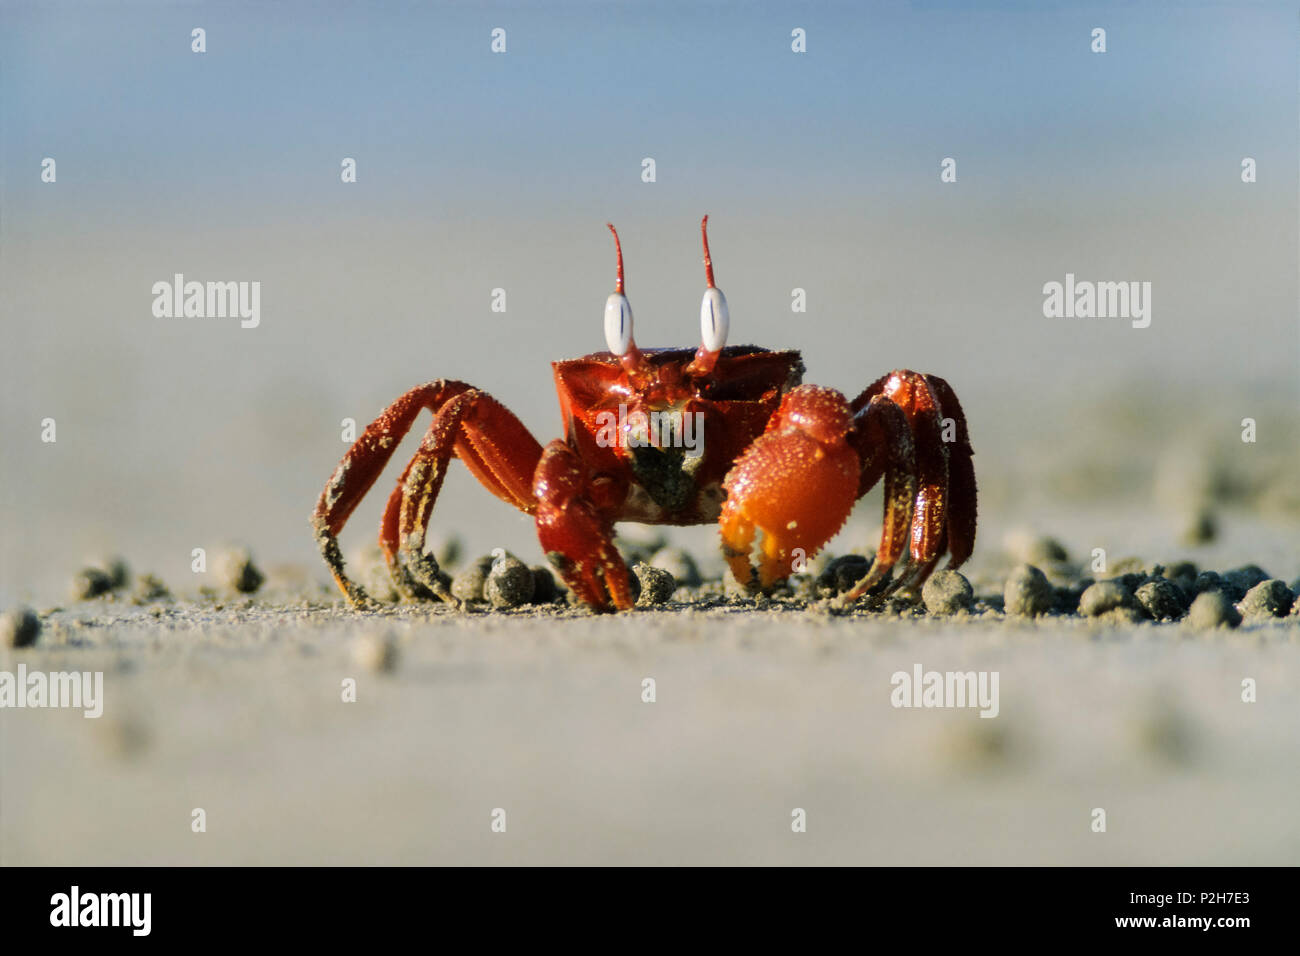 red crab on the beach, Sri Lanka, Asia Stock Photo